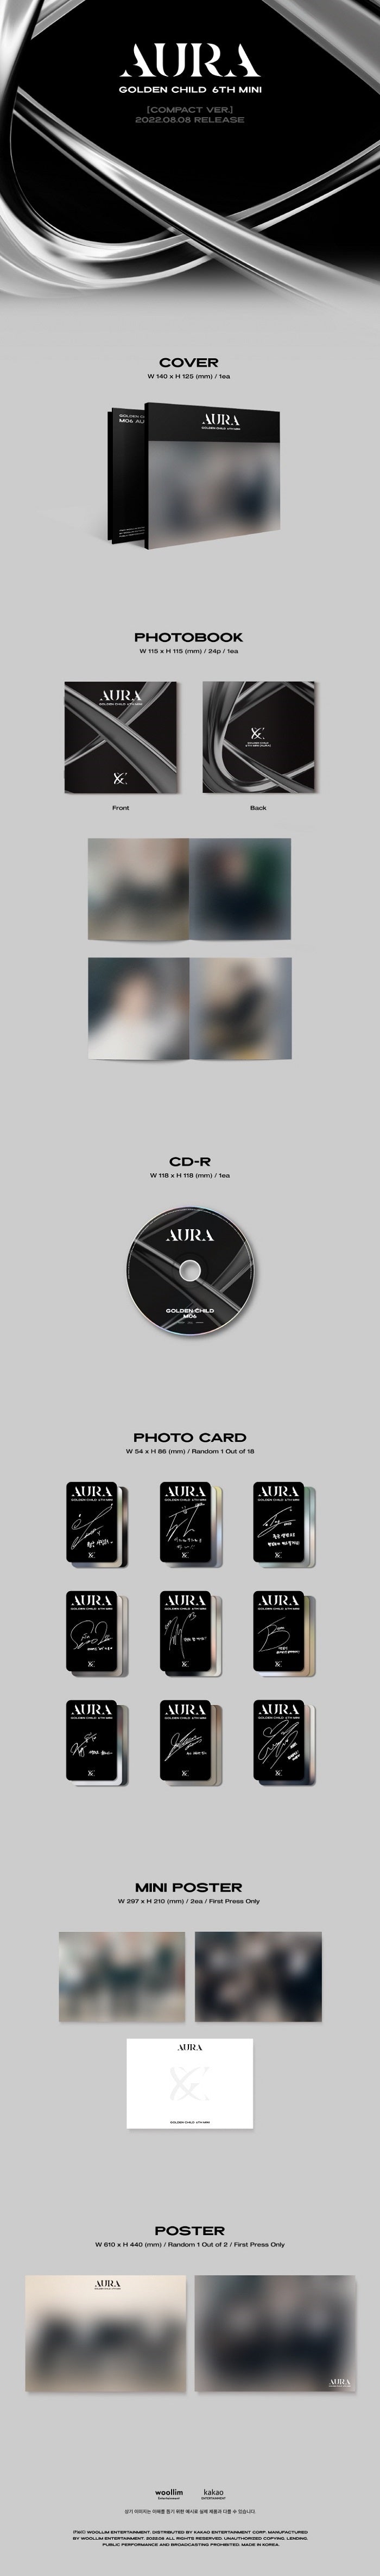 Golden Child - Aura (sexto mini álbum) Compact Ver.